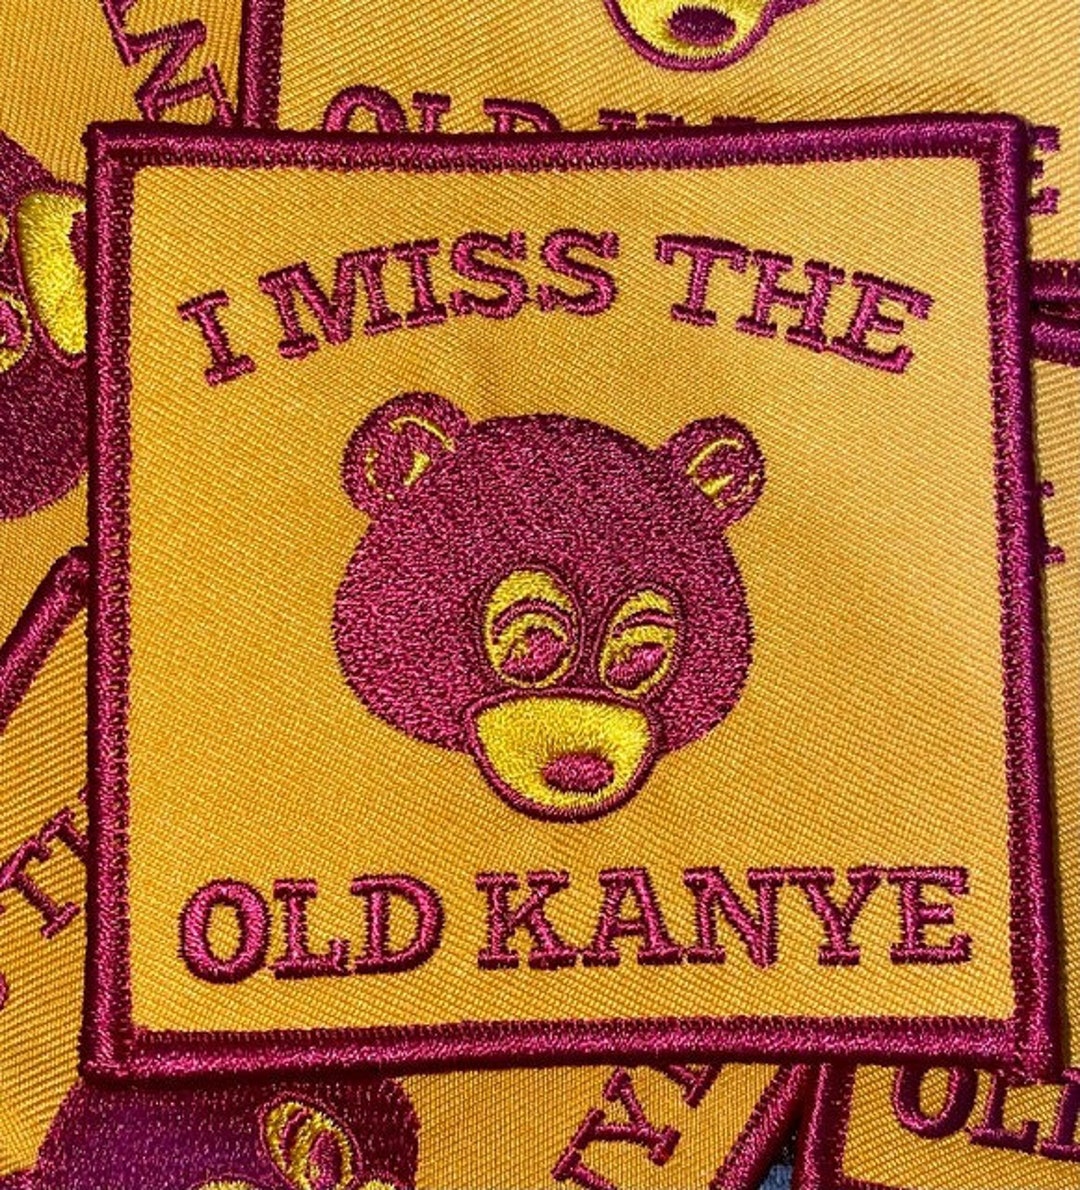 Kanye West I Miss The Old Kanye College Dropout + Hip-Hop Stickers New  Fashion Men backpack